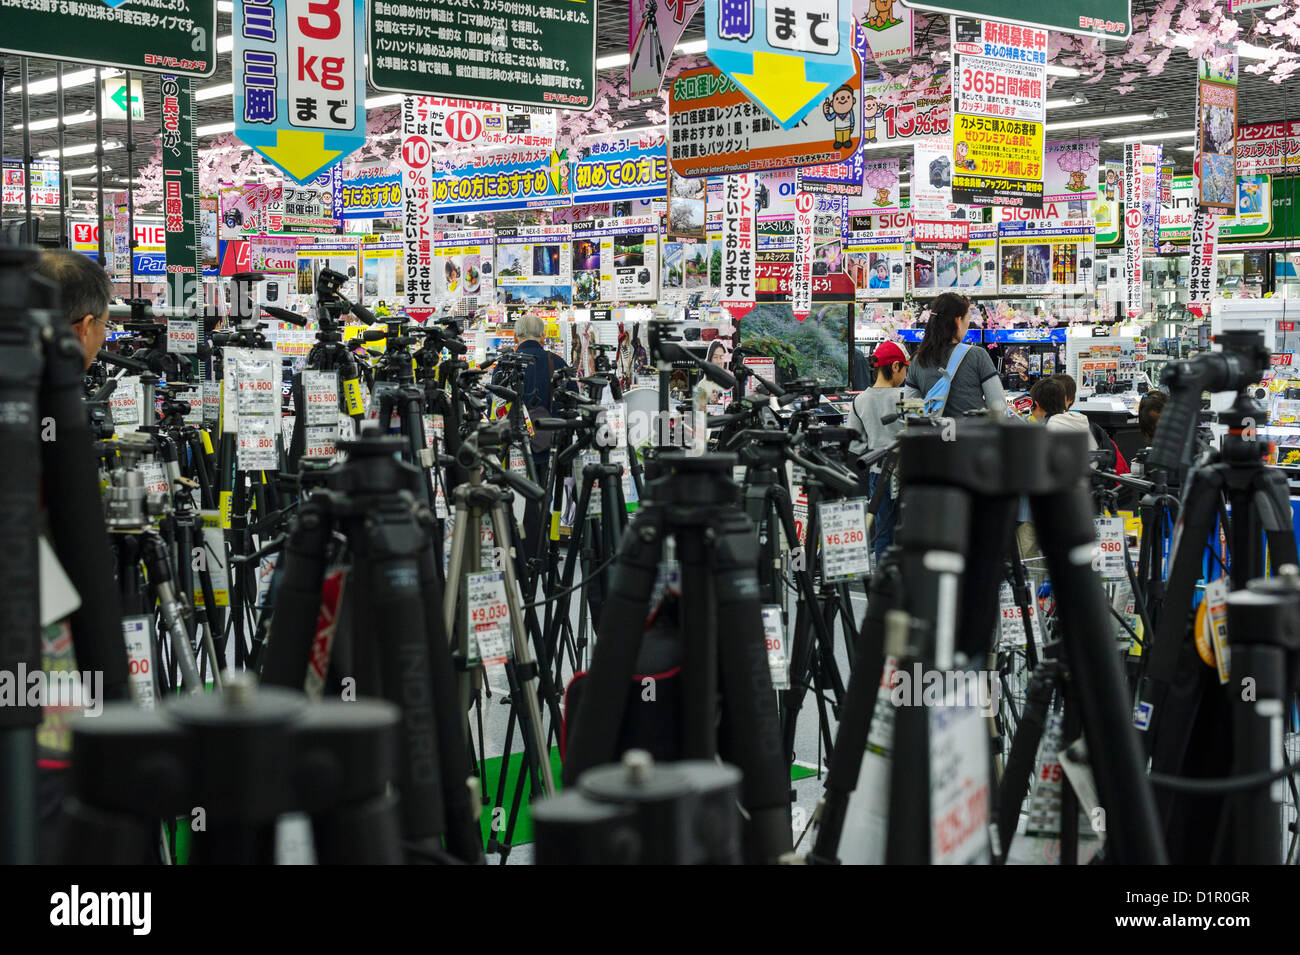 Stative in japanischen Fotogeschäft, Tokio Stockfoto